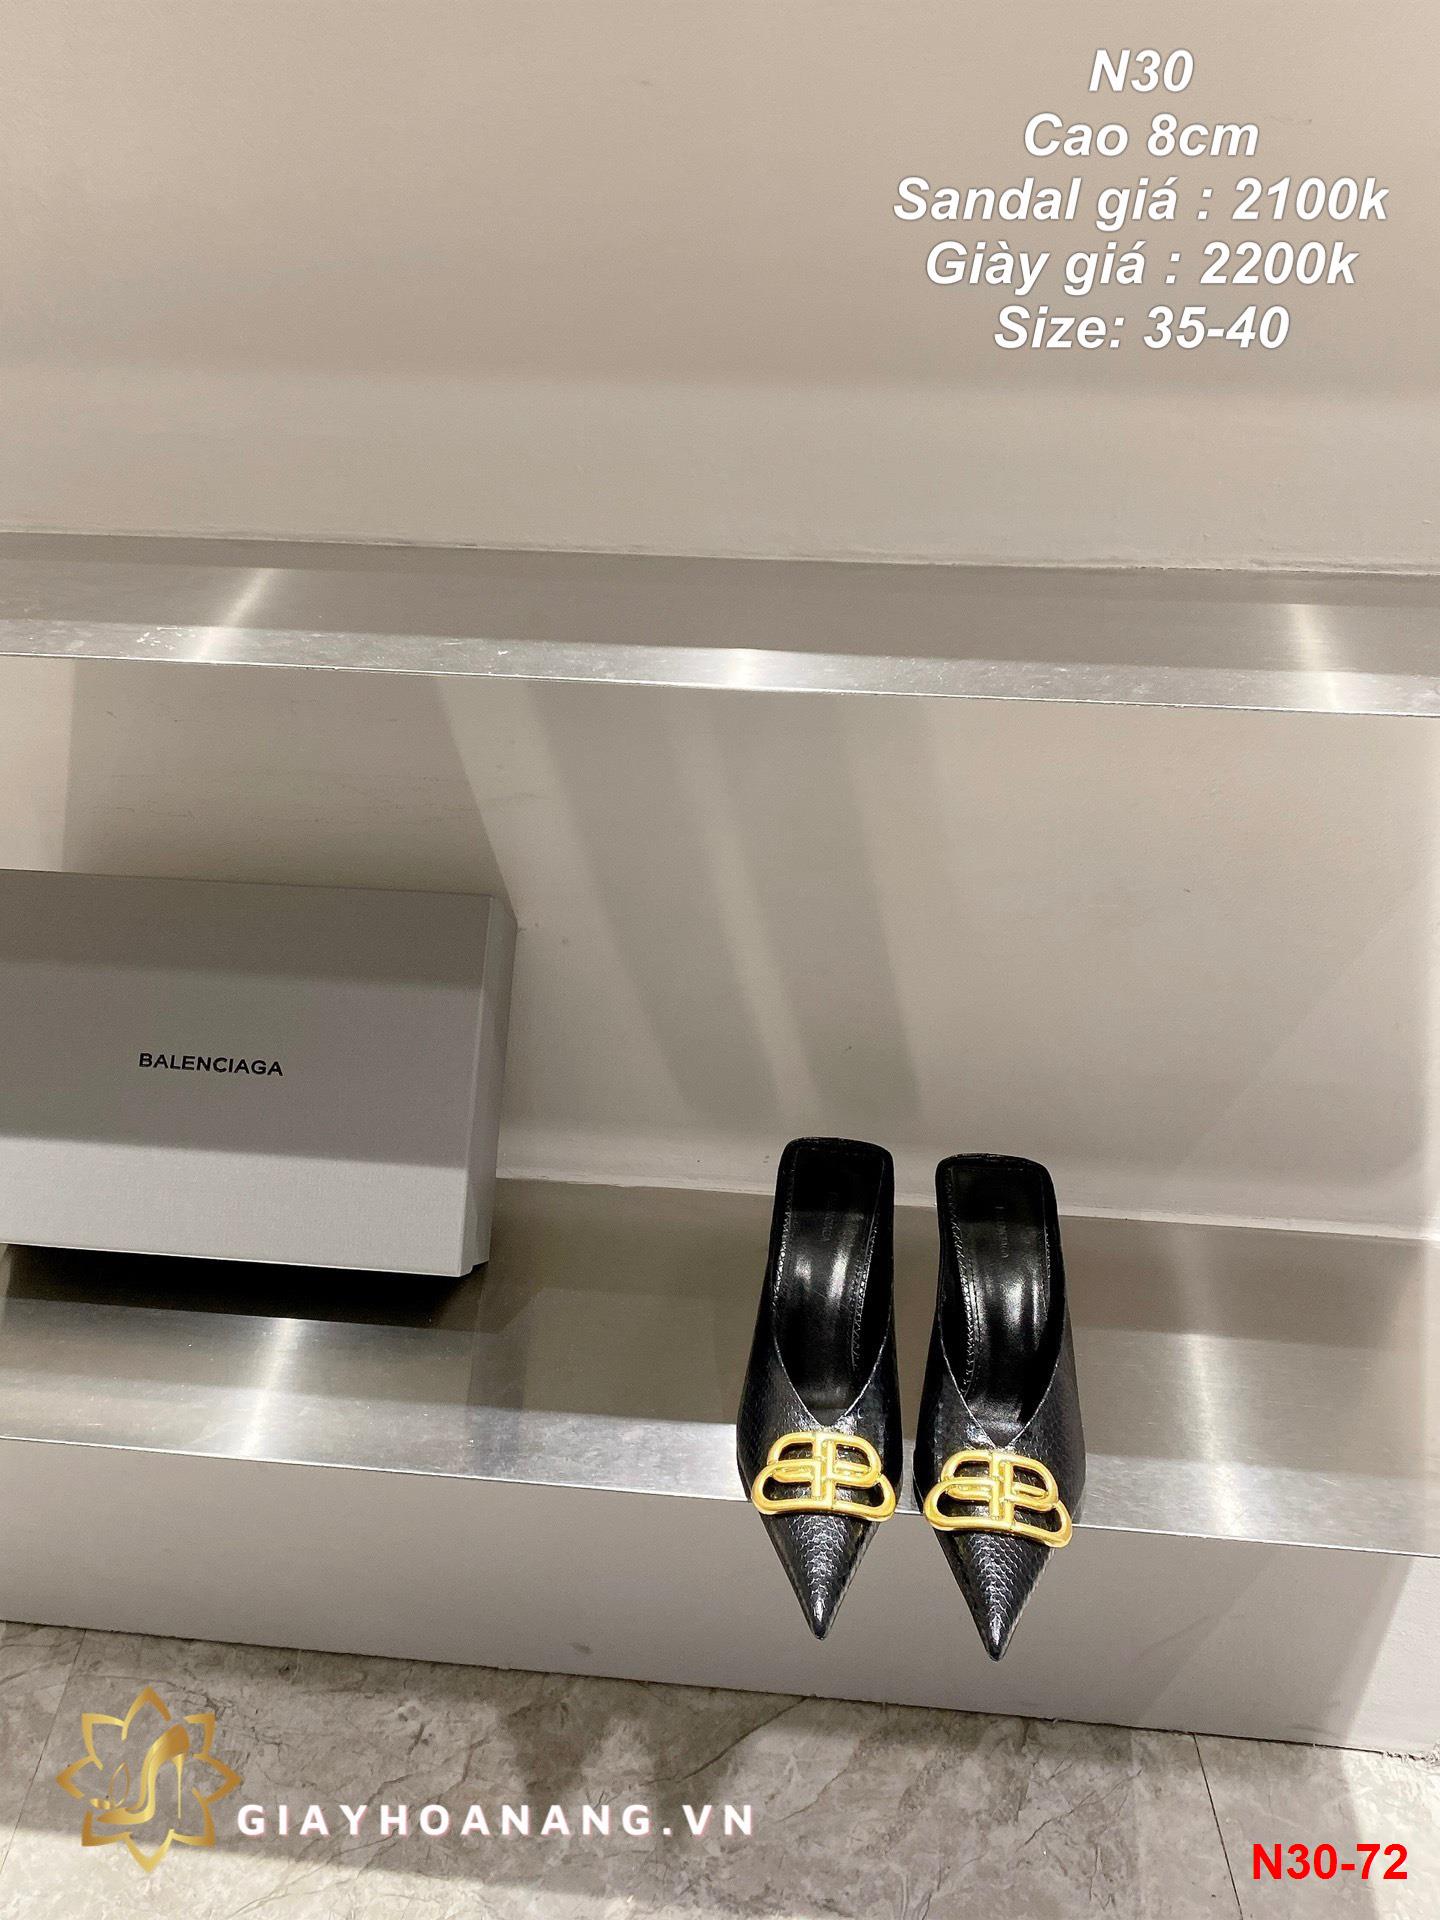 N30-72 Balenciaga giày cao 8cm siêu cấp